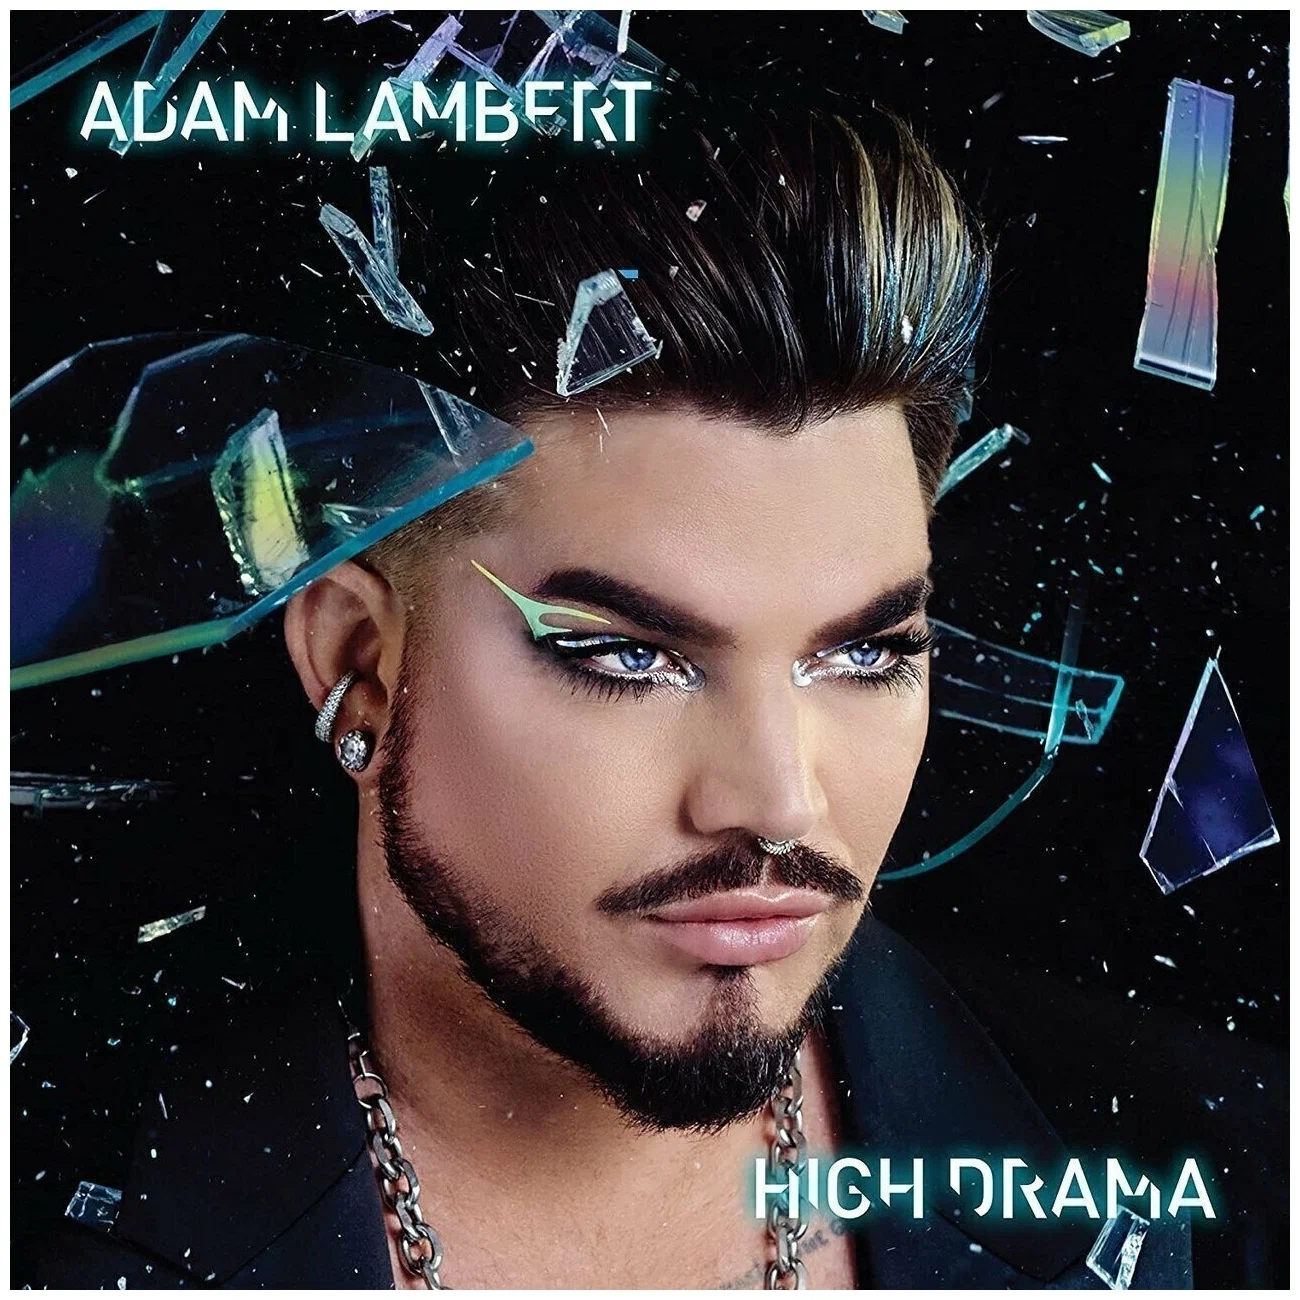 виниловая пластинка lambert adam high drama 5054197308611 Виниловая Пластинка Lambert, Adam, High Drama (5054197308628)